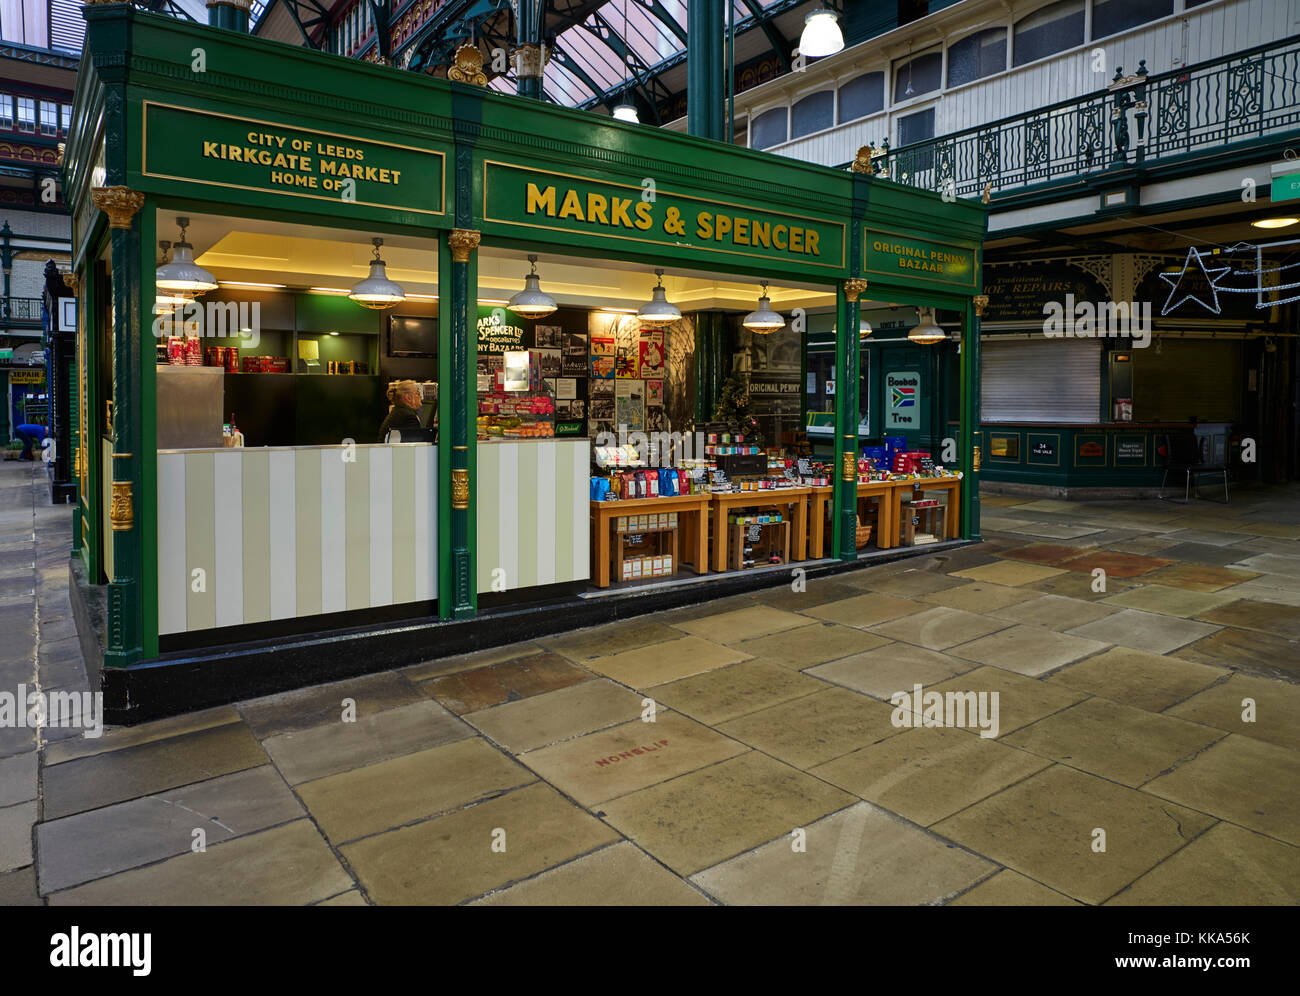 The original penny bazaar Marks & Spencer in Leeds Kirkdale market Stock Photo